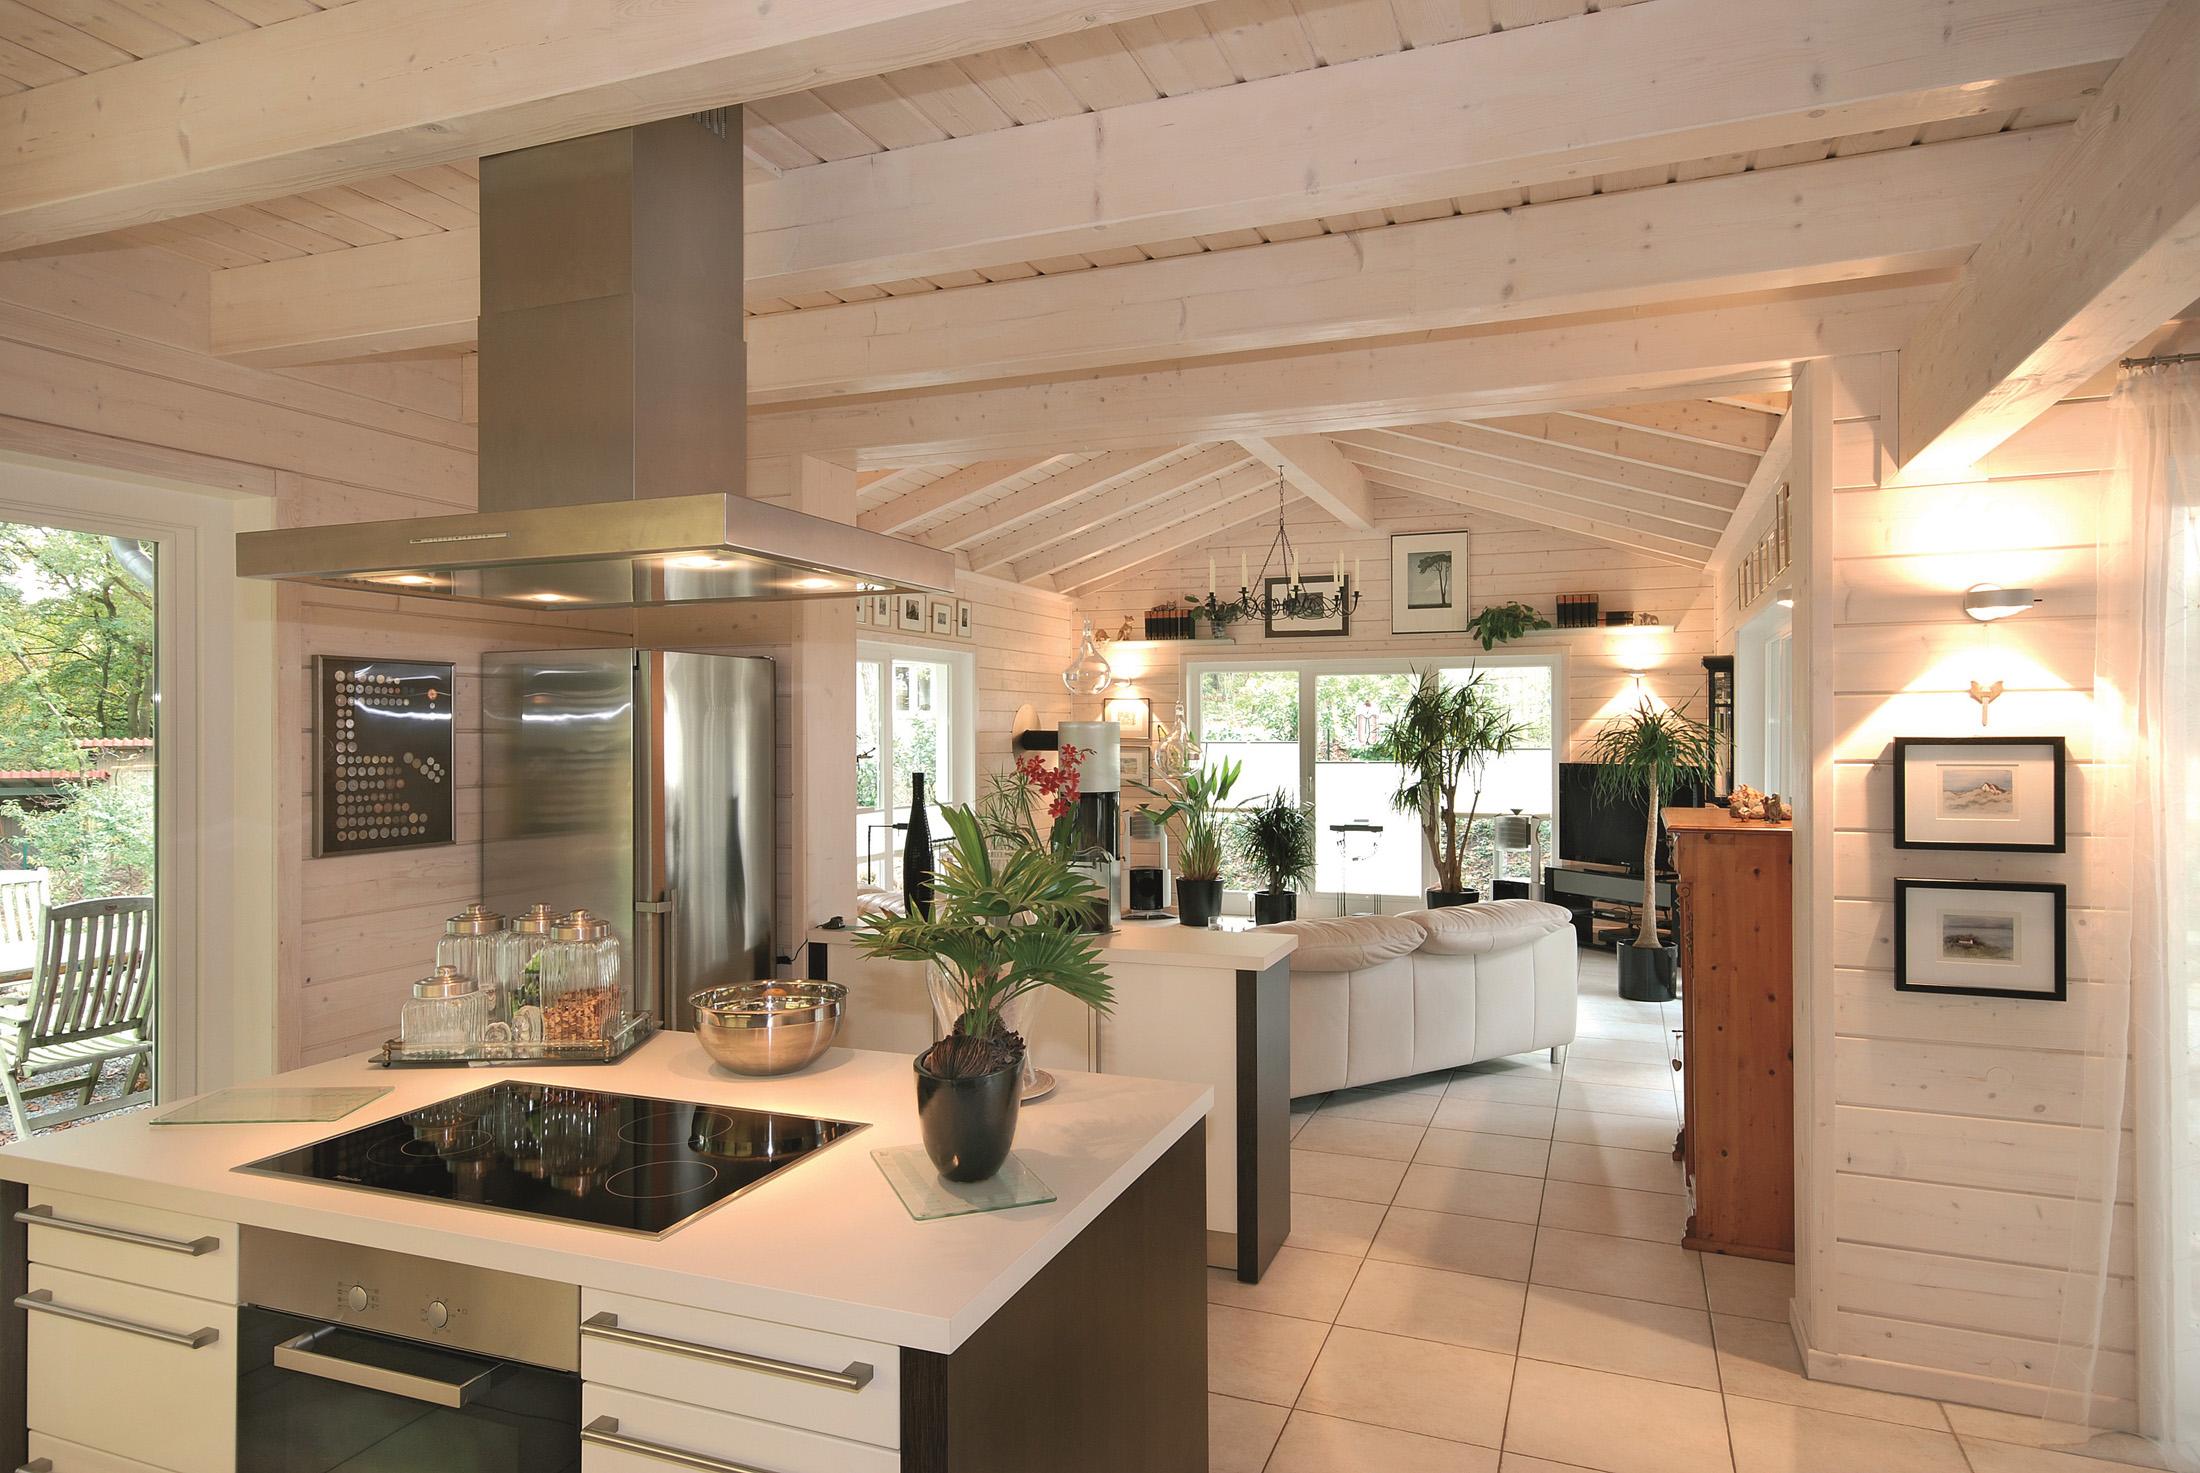 Offene Küche im skandinavischen Look #fliesen #holzpaneel #cremefarben ©Stommel Haus